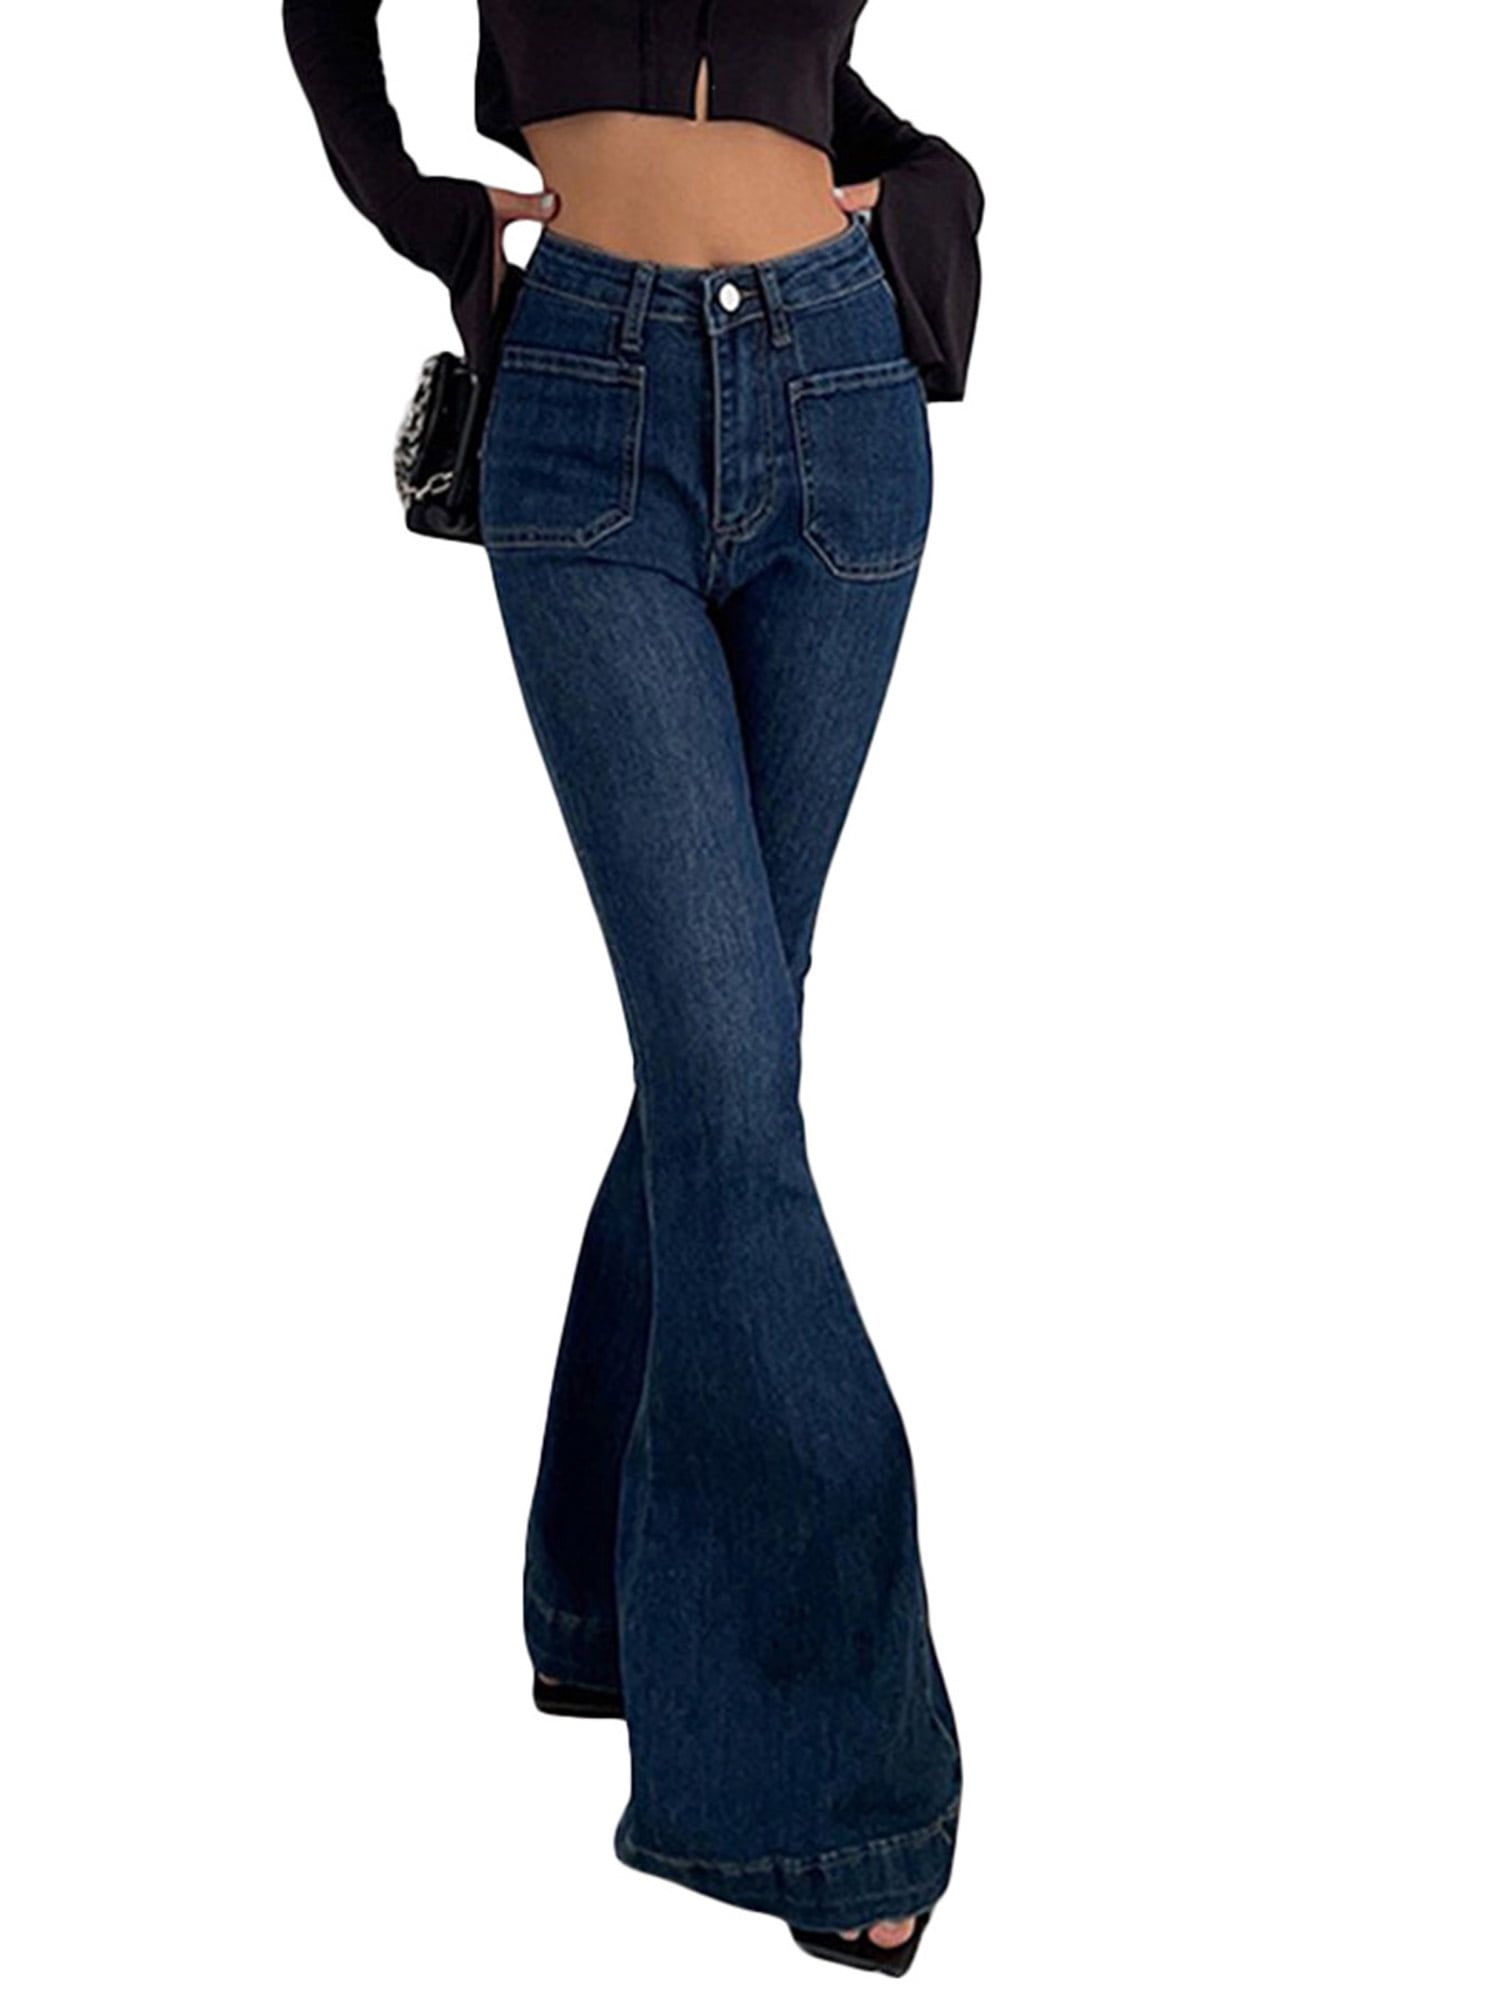 Coduop Women High Waist Skinny Jeans Aesthetic Vintage Flare Jeans Bell  Bottom Denim Jeans